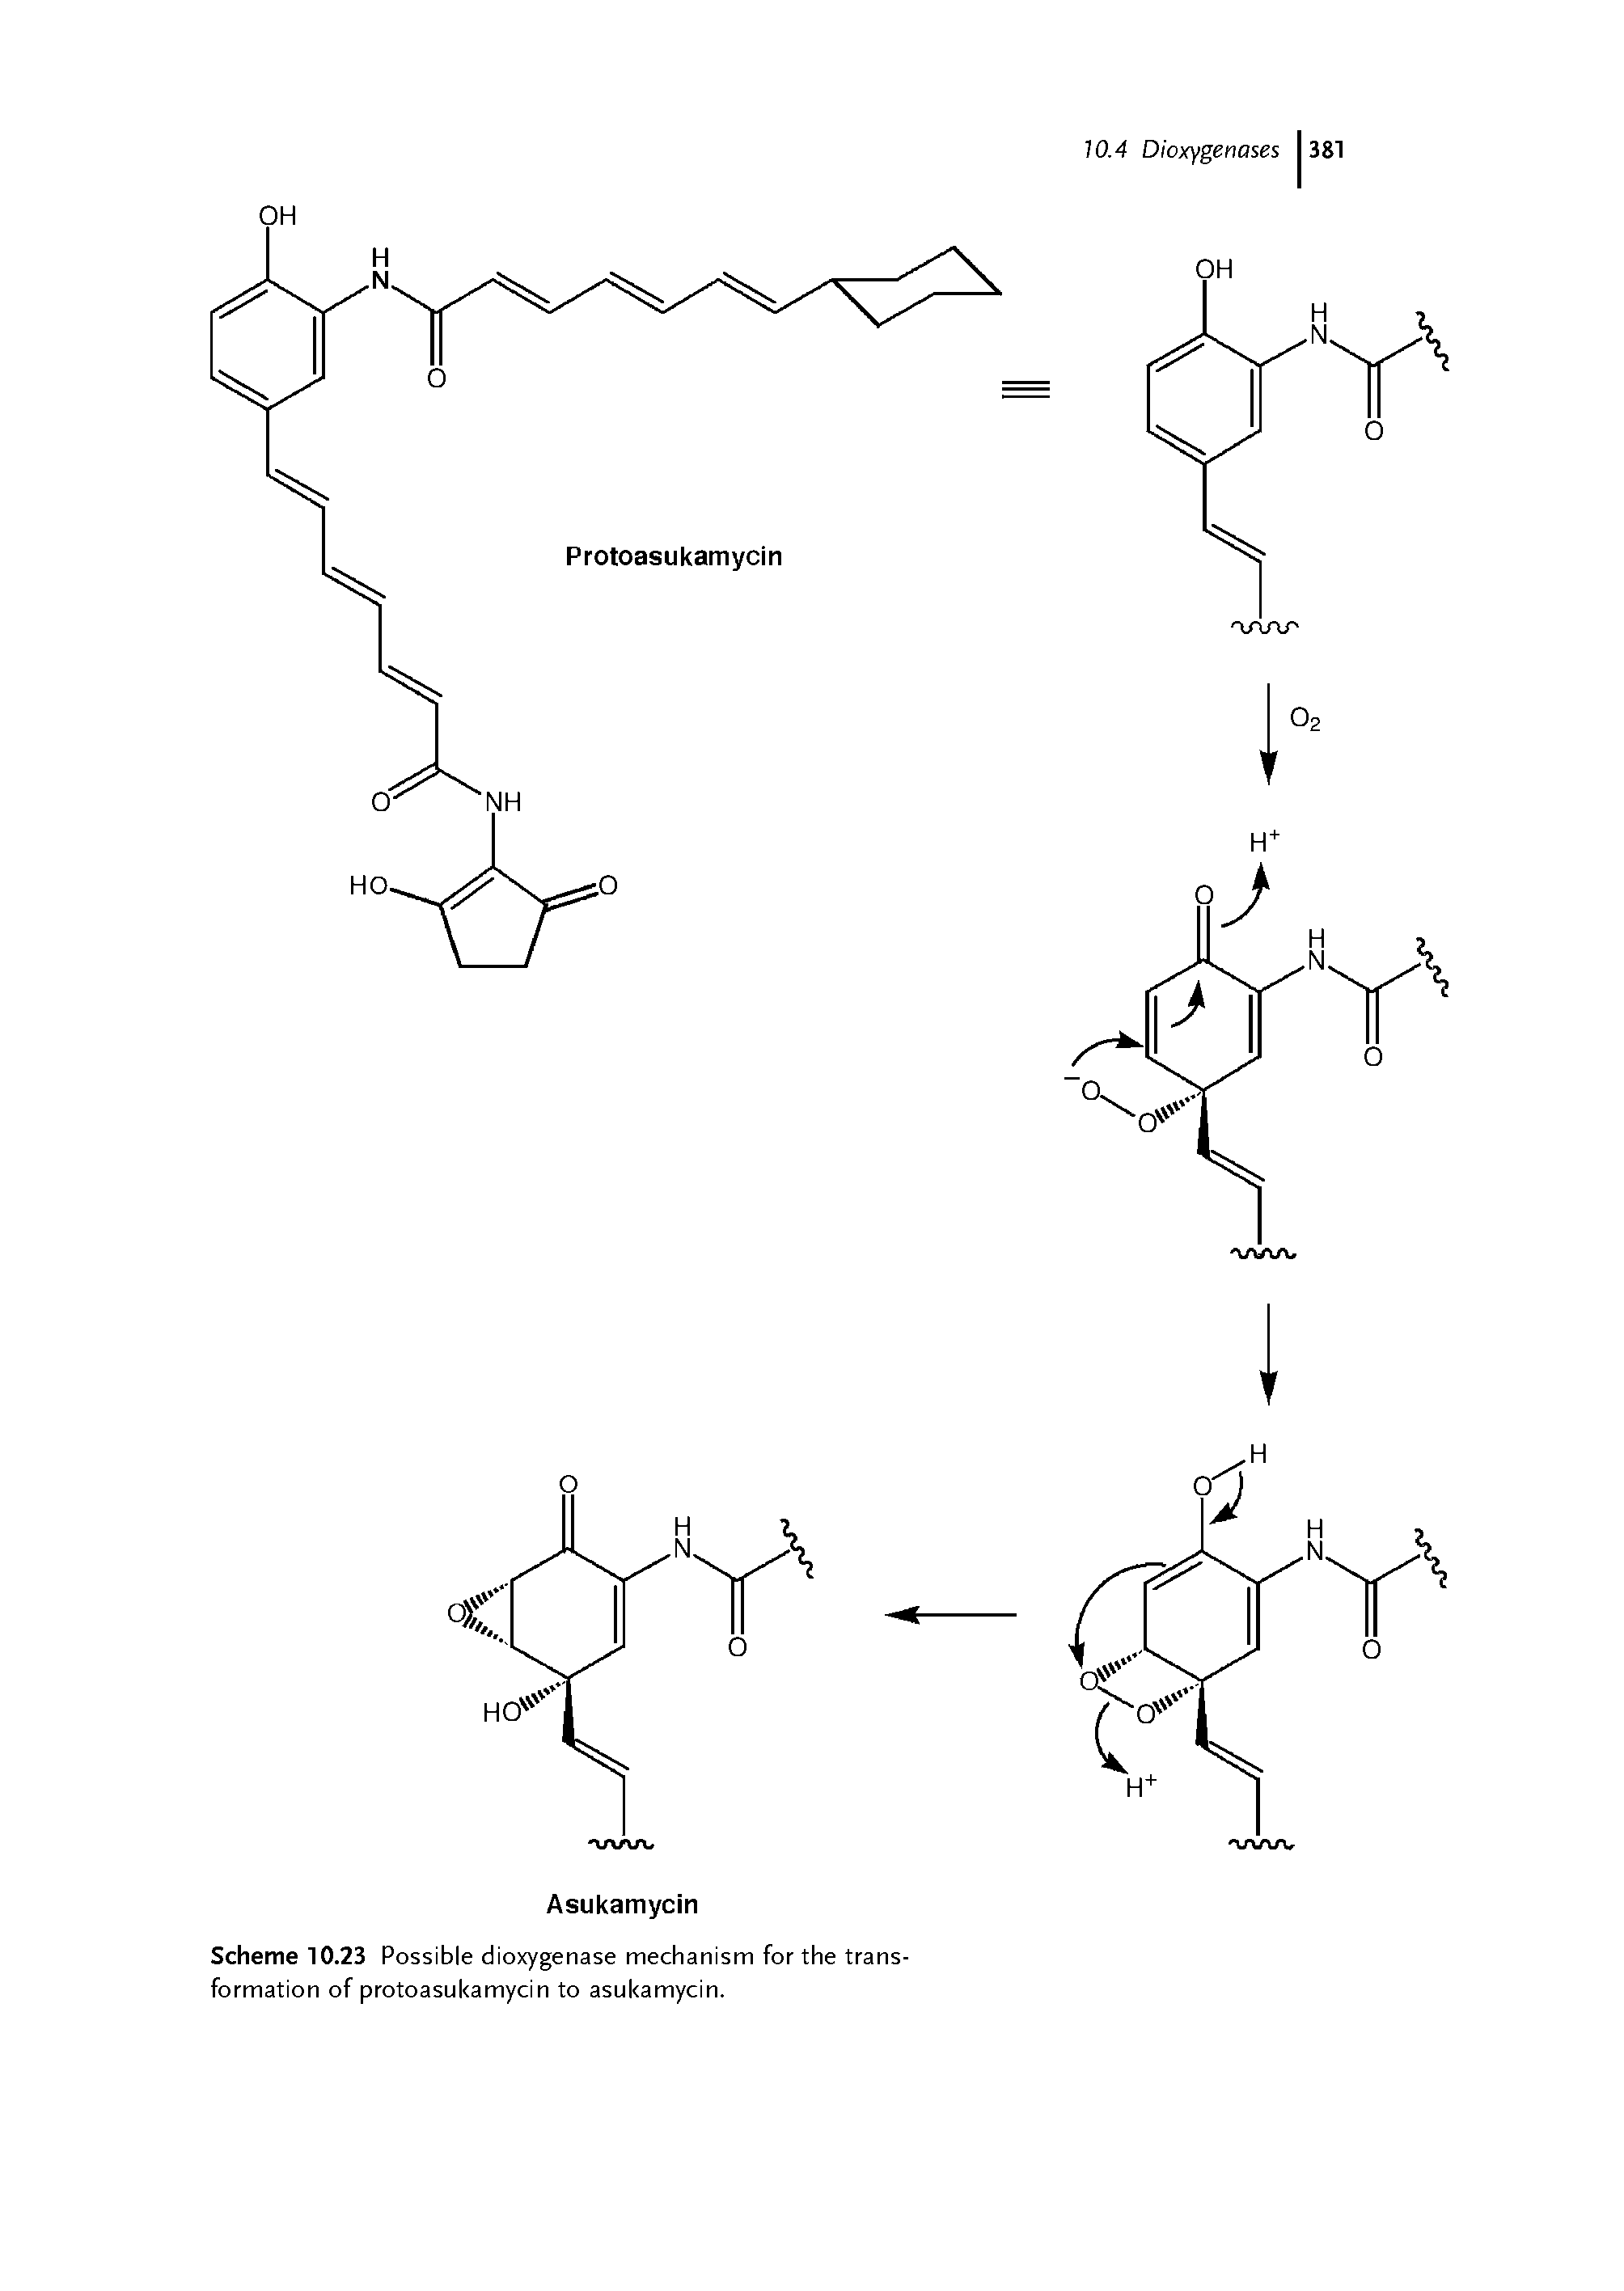 Scheme 10.23 Possible dioxygenase mechanism for the transformation of protoasukamycin to asukamycin.